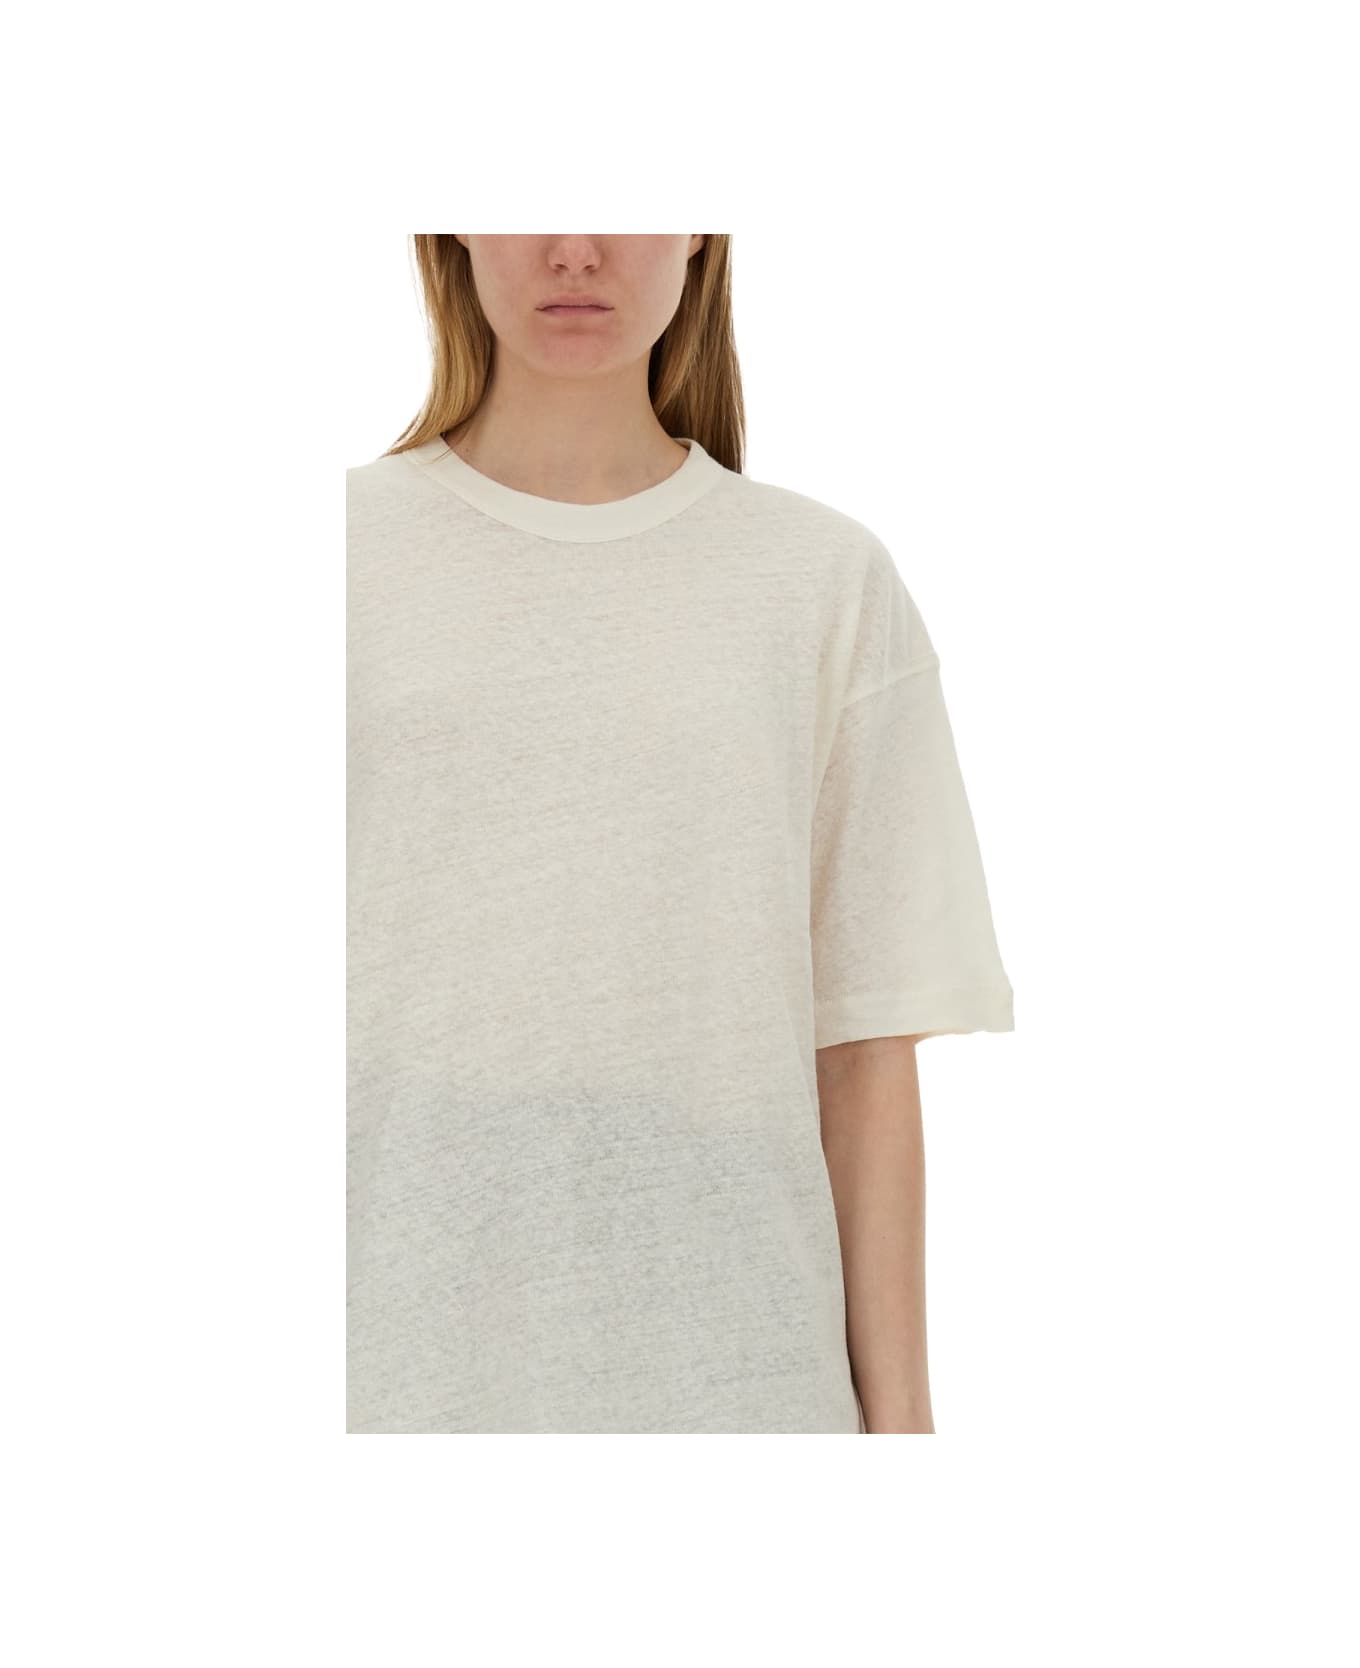 YMC Cotton And Linen T-shirt - WHITE